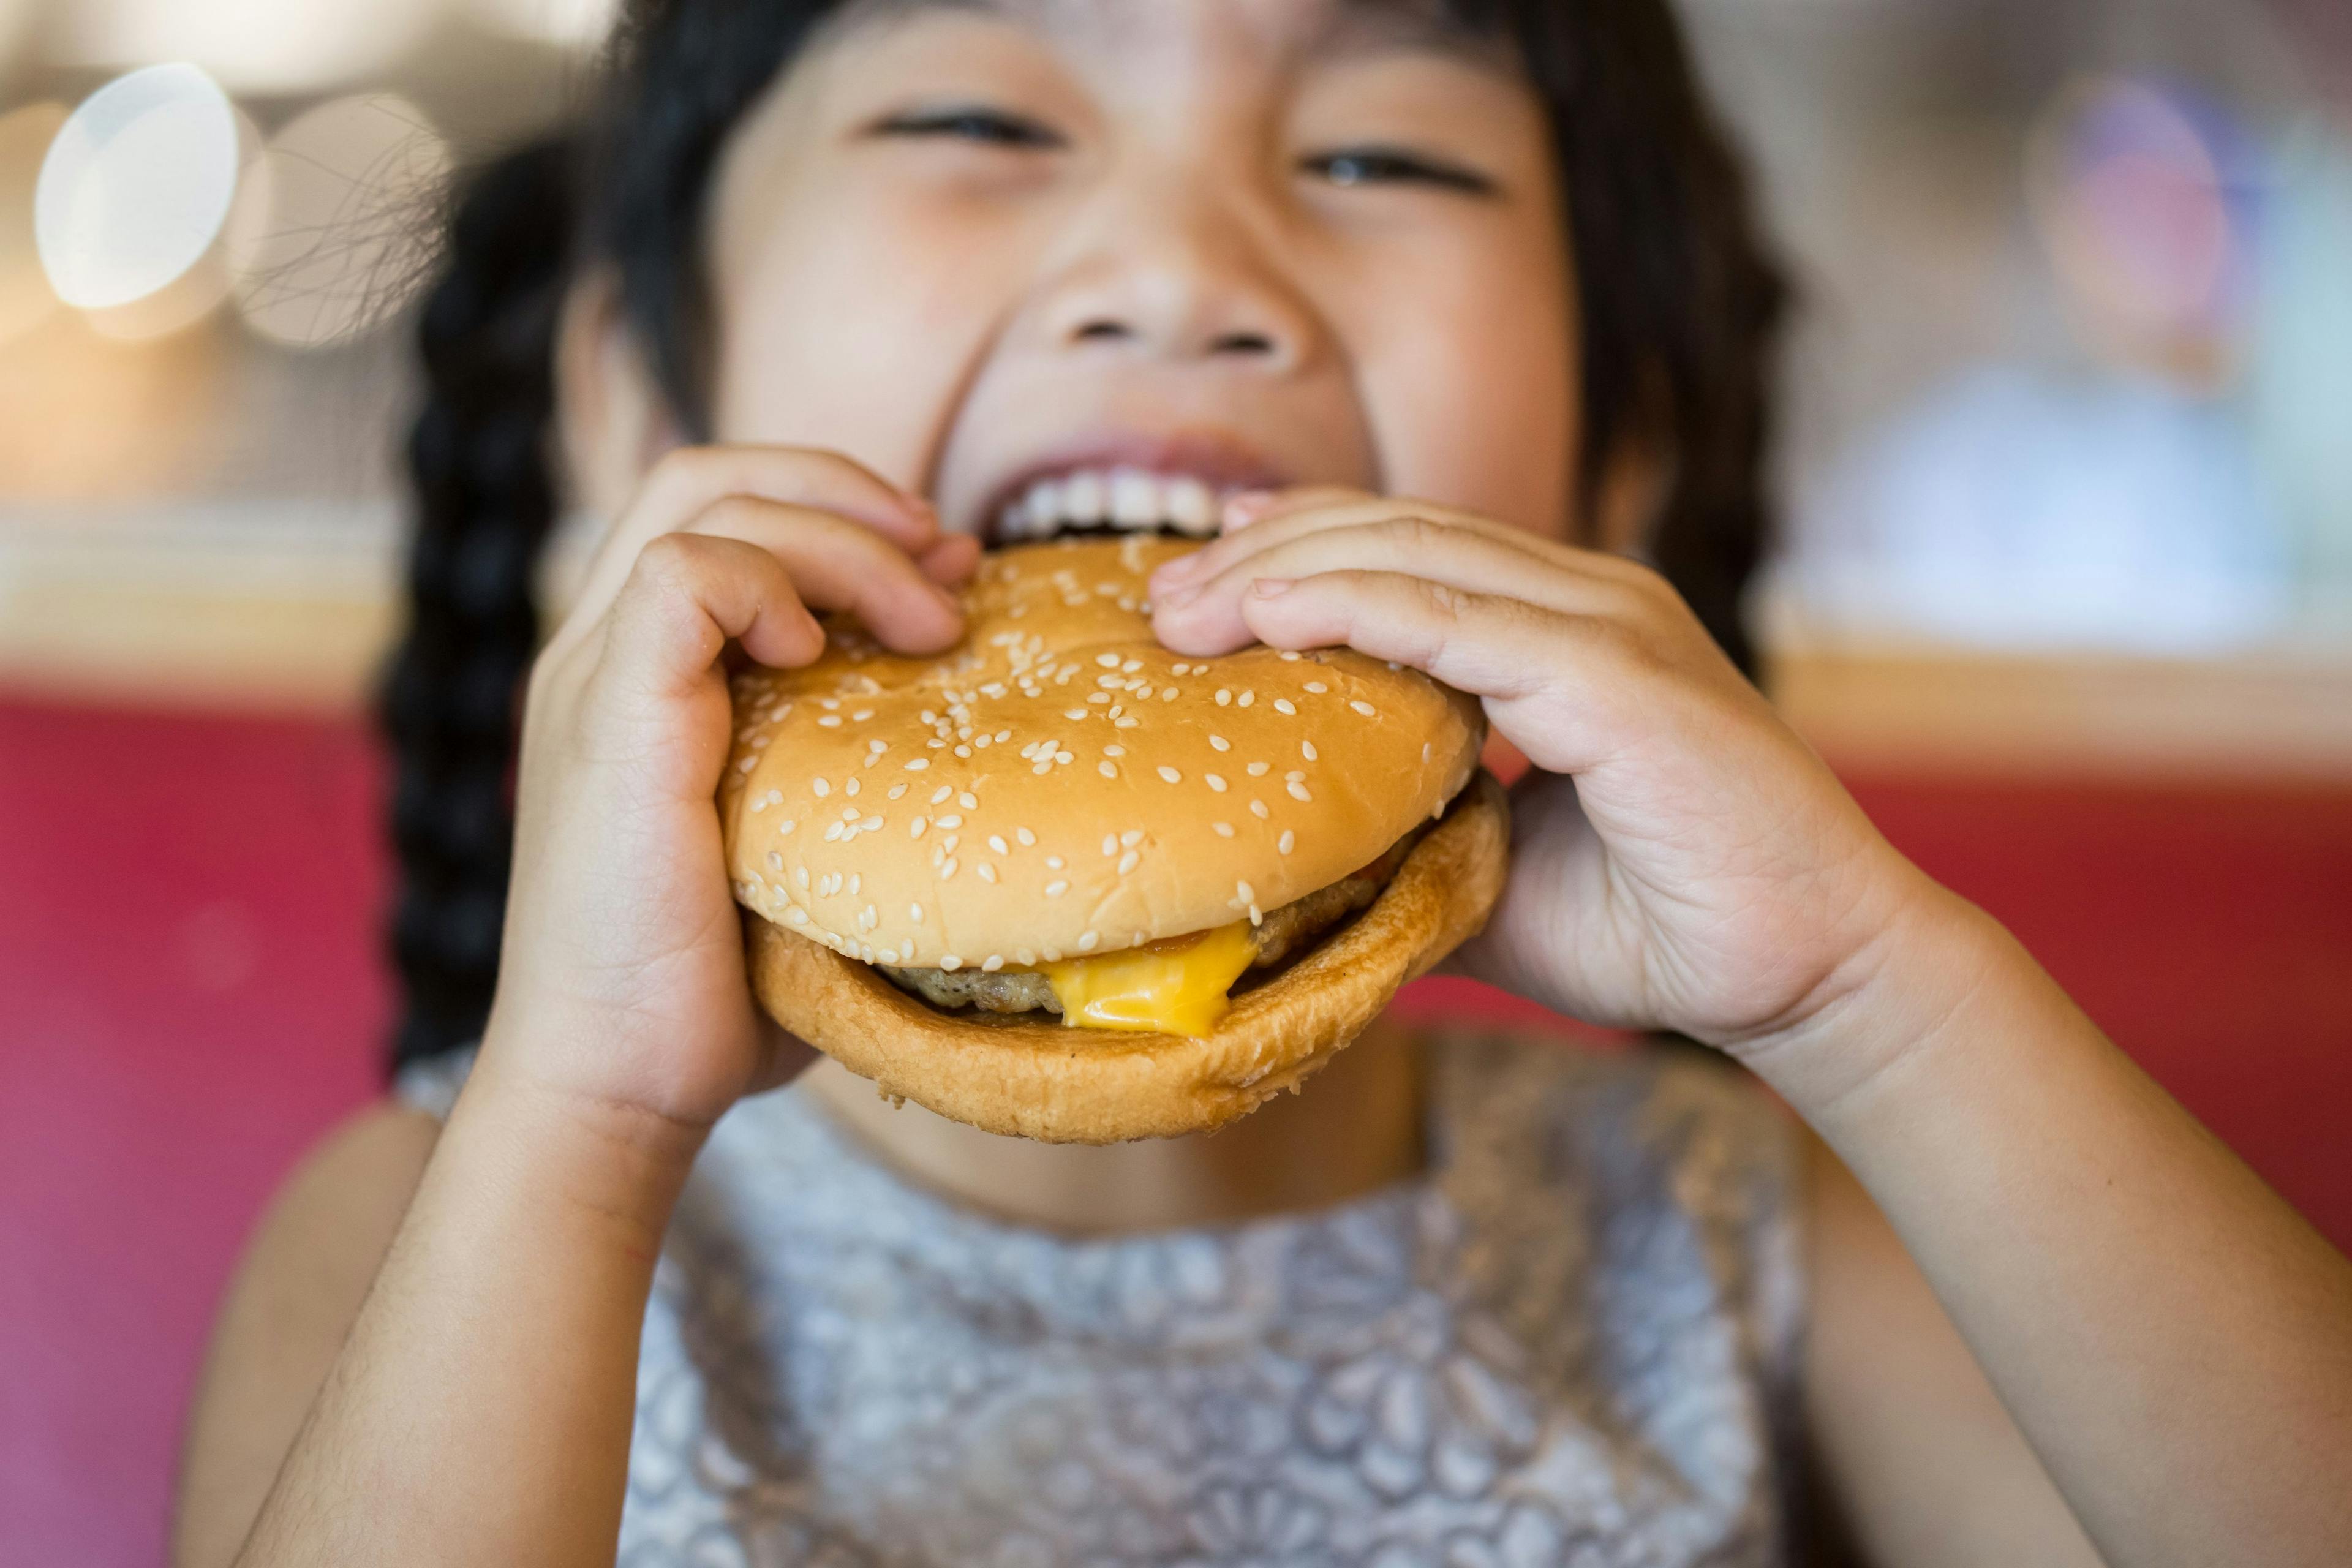 Child eating fast food cheeseburger | Image credit: escapejaja – stock.adobe.com